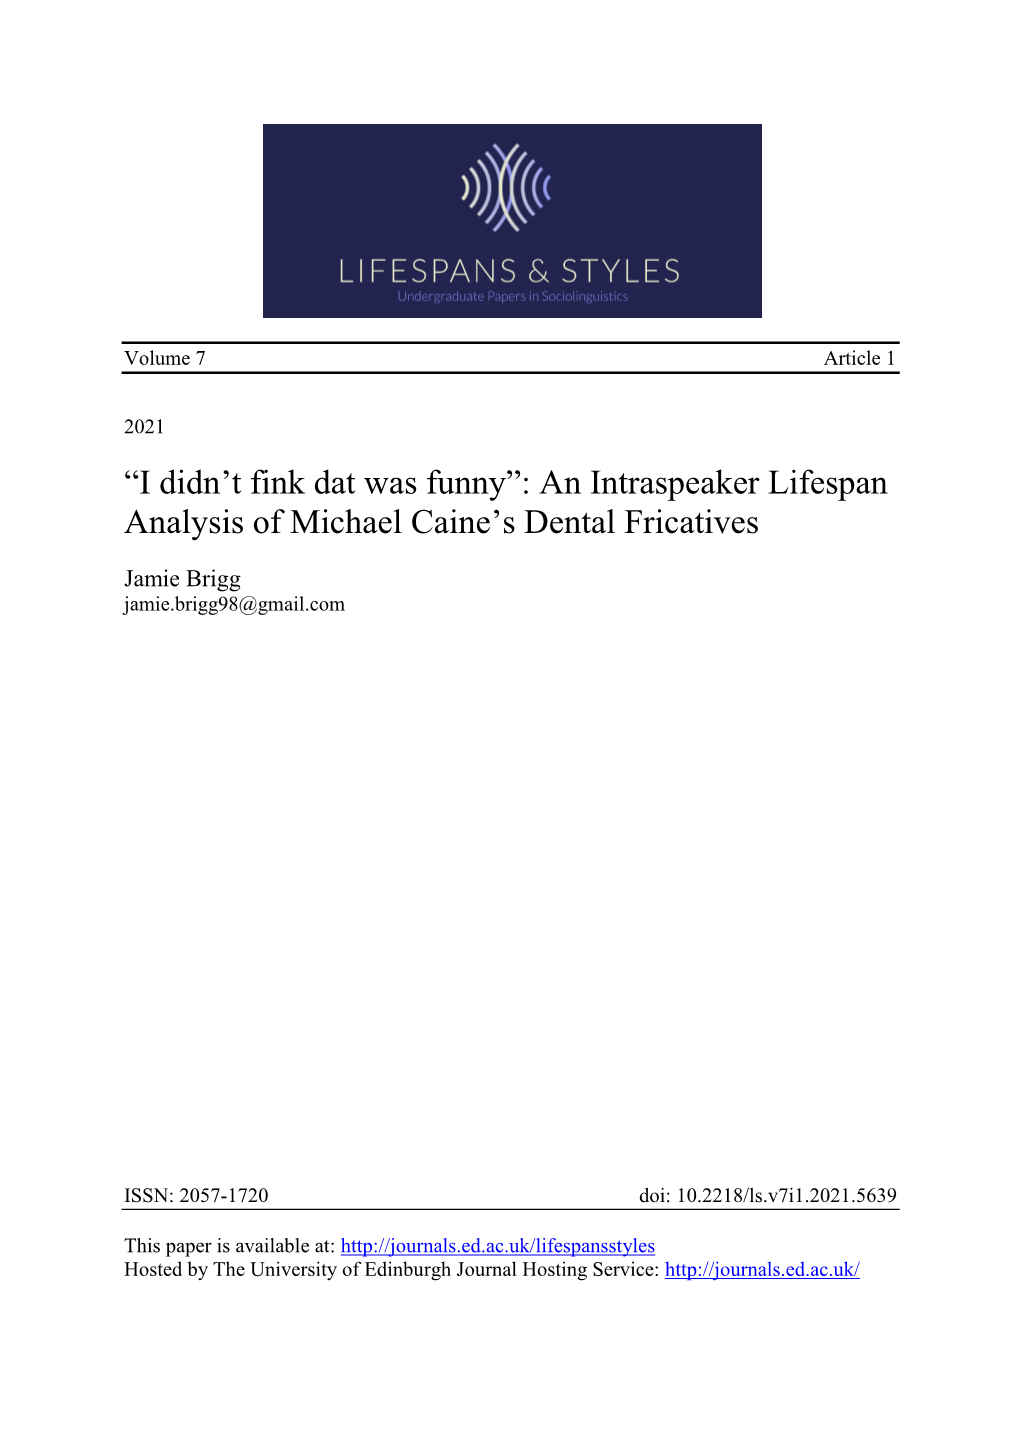 An Intraspeaker Lifespan Analysis of Michael Caine's Dental Fricatives